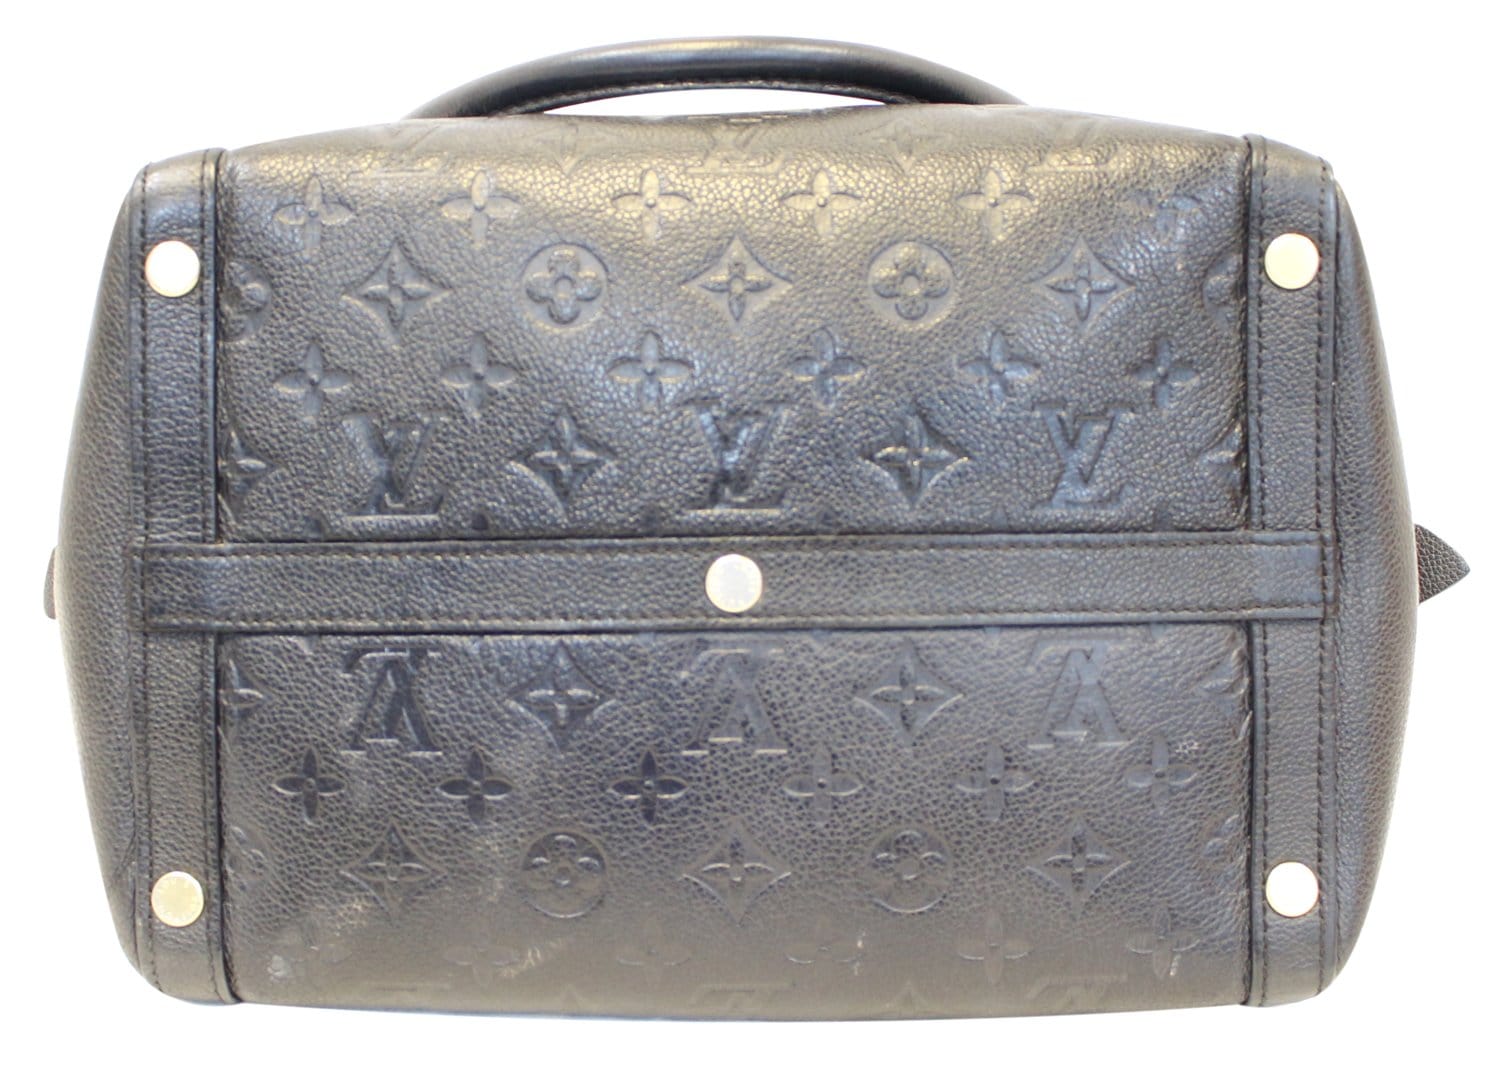 LOUIS VUITTON Marais MM Empreinte Leather Handbag Speedy + Box